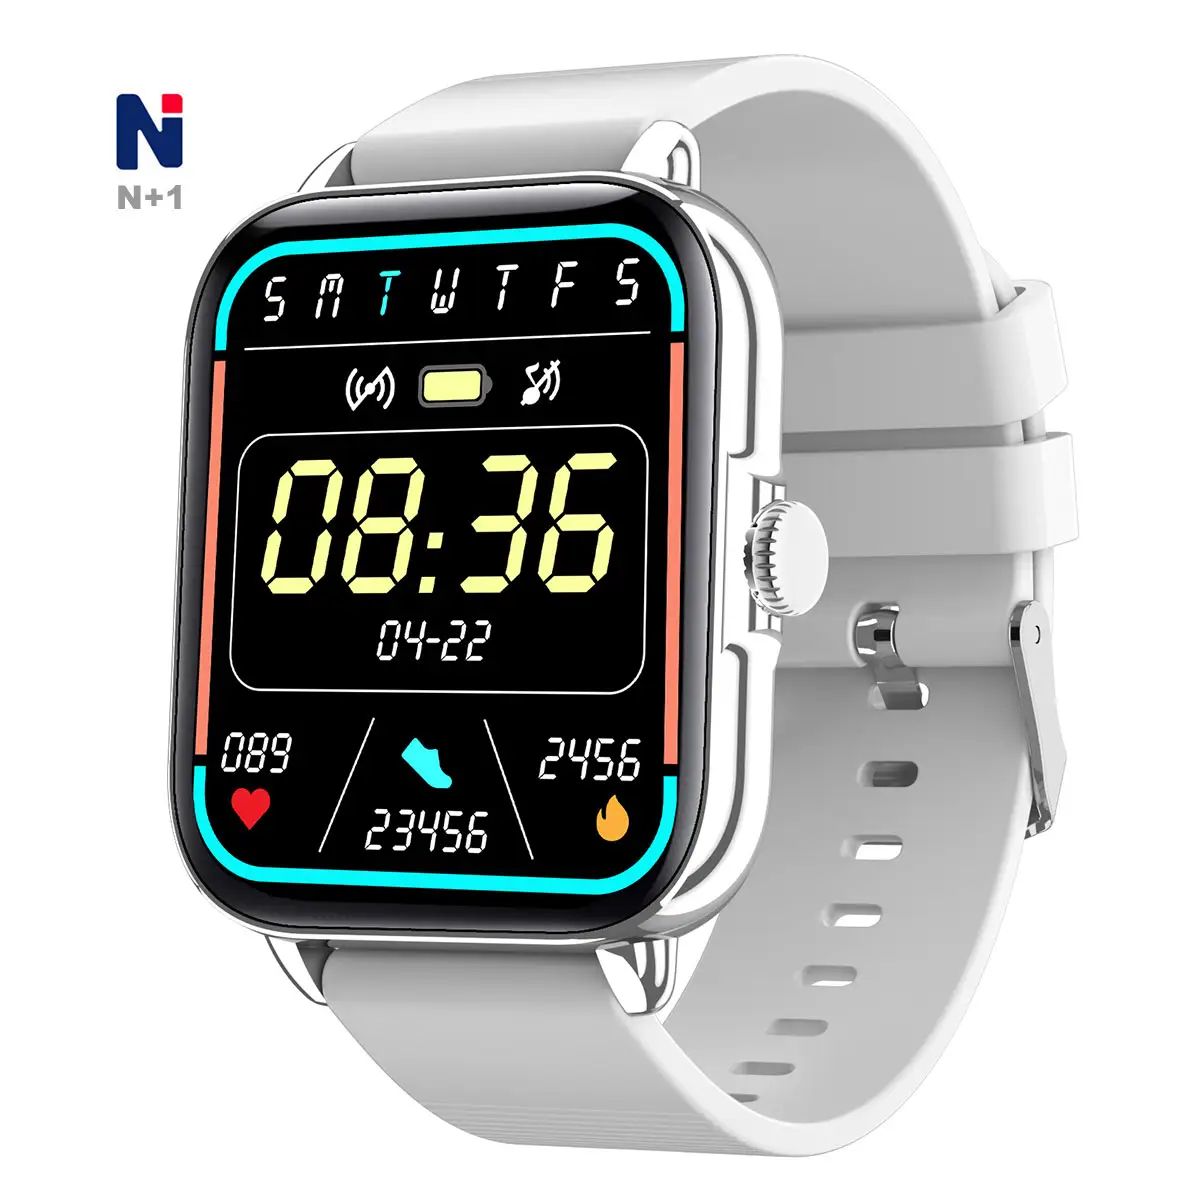 OEM ODM SDK senior smartwatch ECG health fitness tracker monitor waterproof sport gps android ios reloj intelligent smart watch